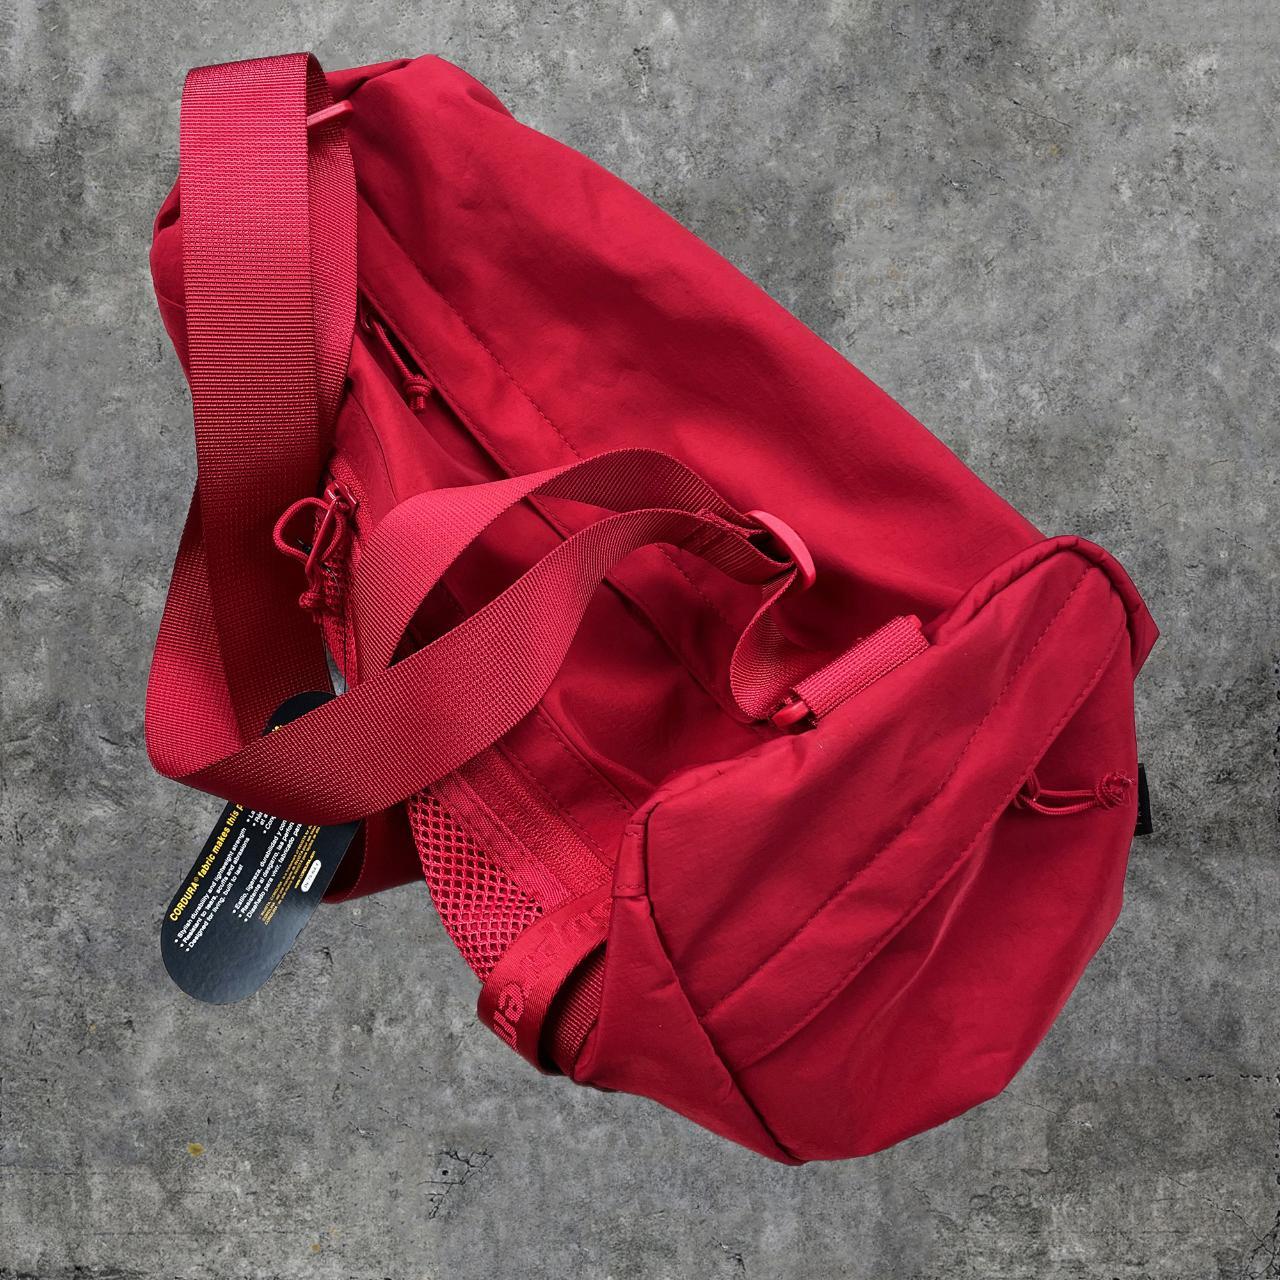 Supreme Mini Duffle Bag [Dark Red] — PURE